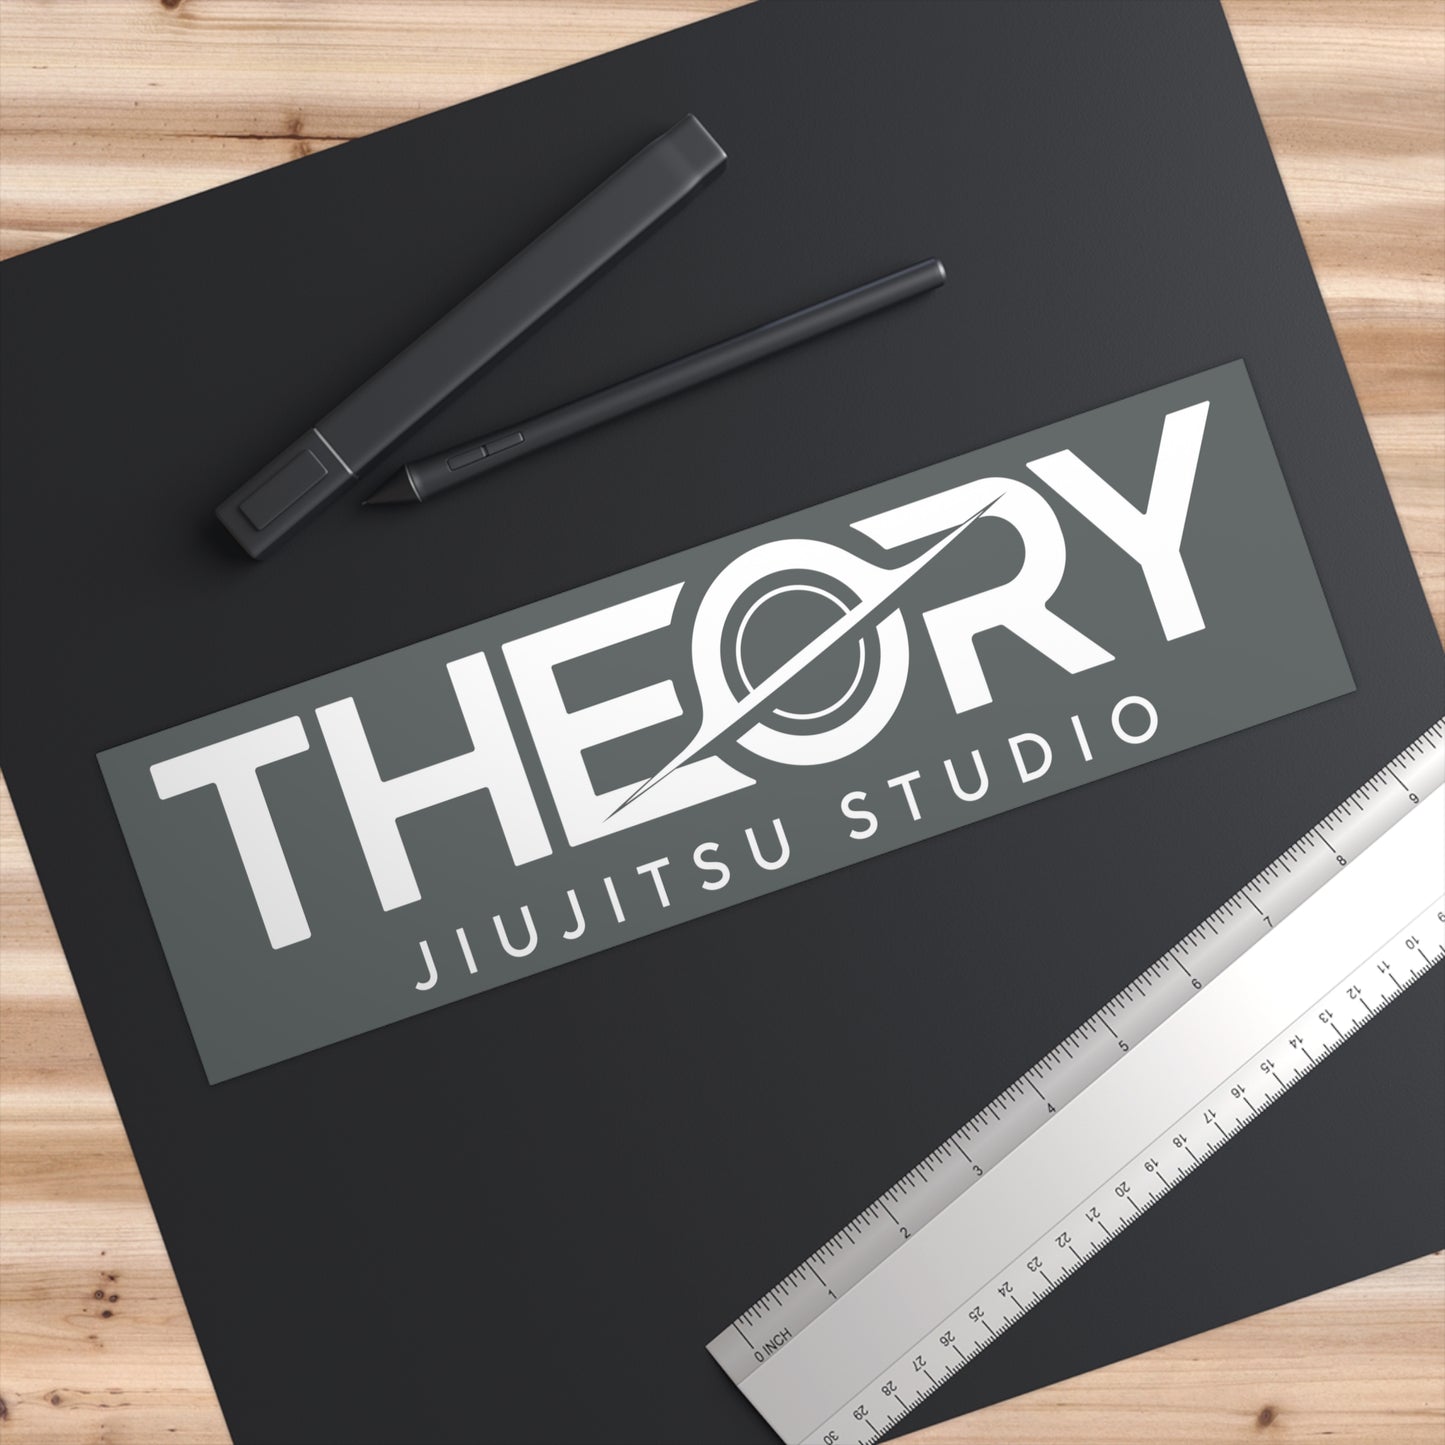 "Journey with THEØRY" Logo Bumper Sticker